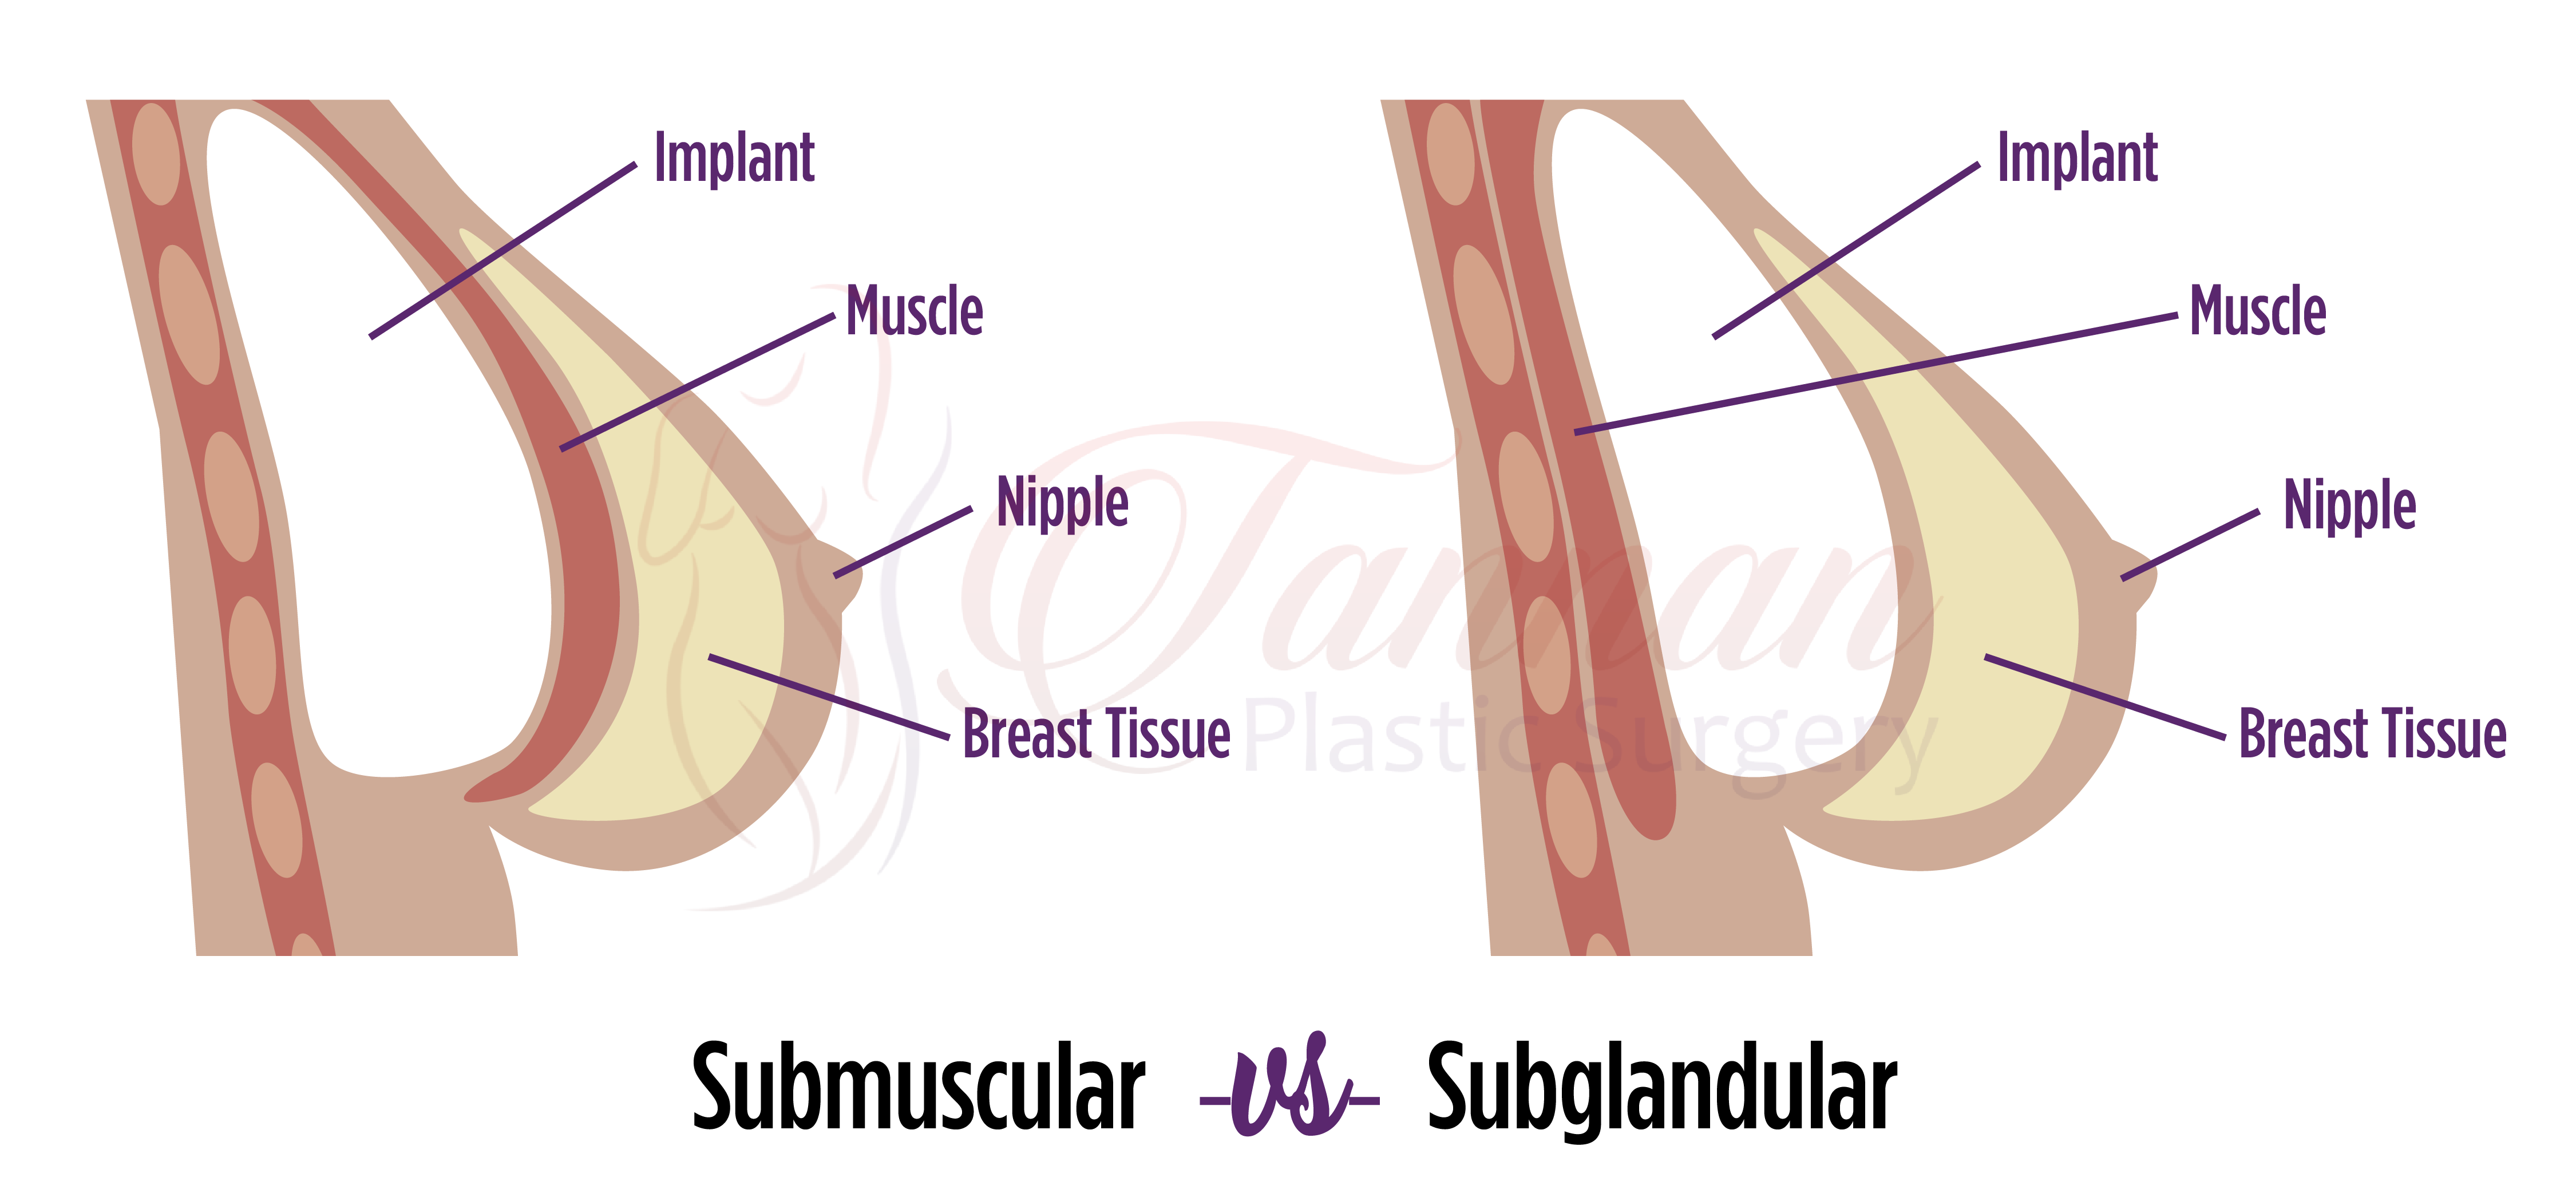 Subglandular -vs- Submuscular Implant Comparison Labeled - Tannan Plastic Surgery